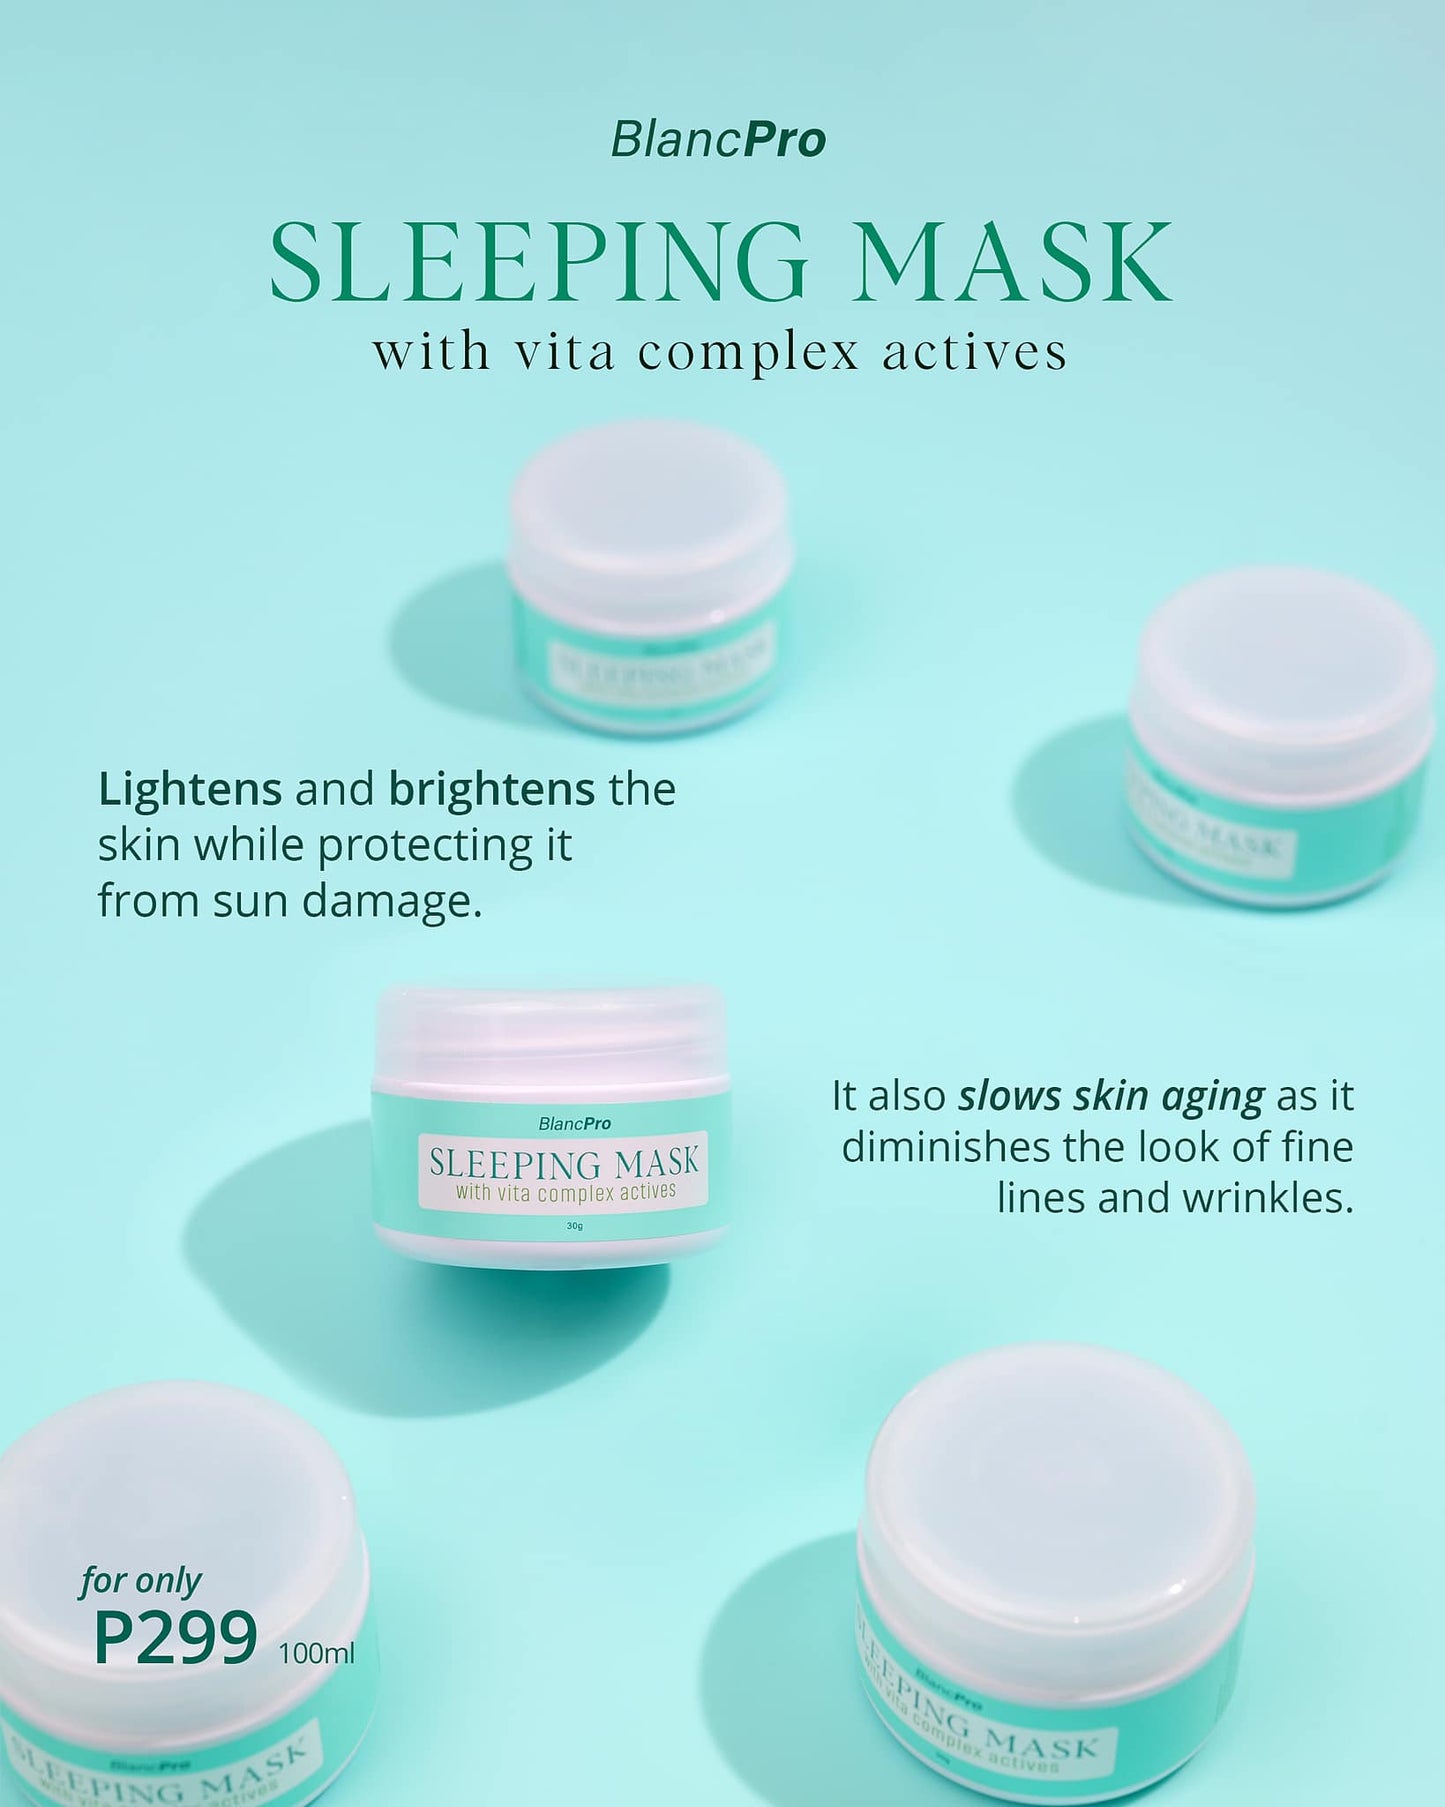 Blanc Pro Sleeping Mask with Vita Complex Actives Blancpro PROMO